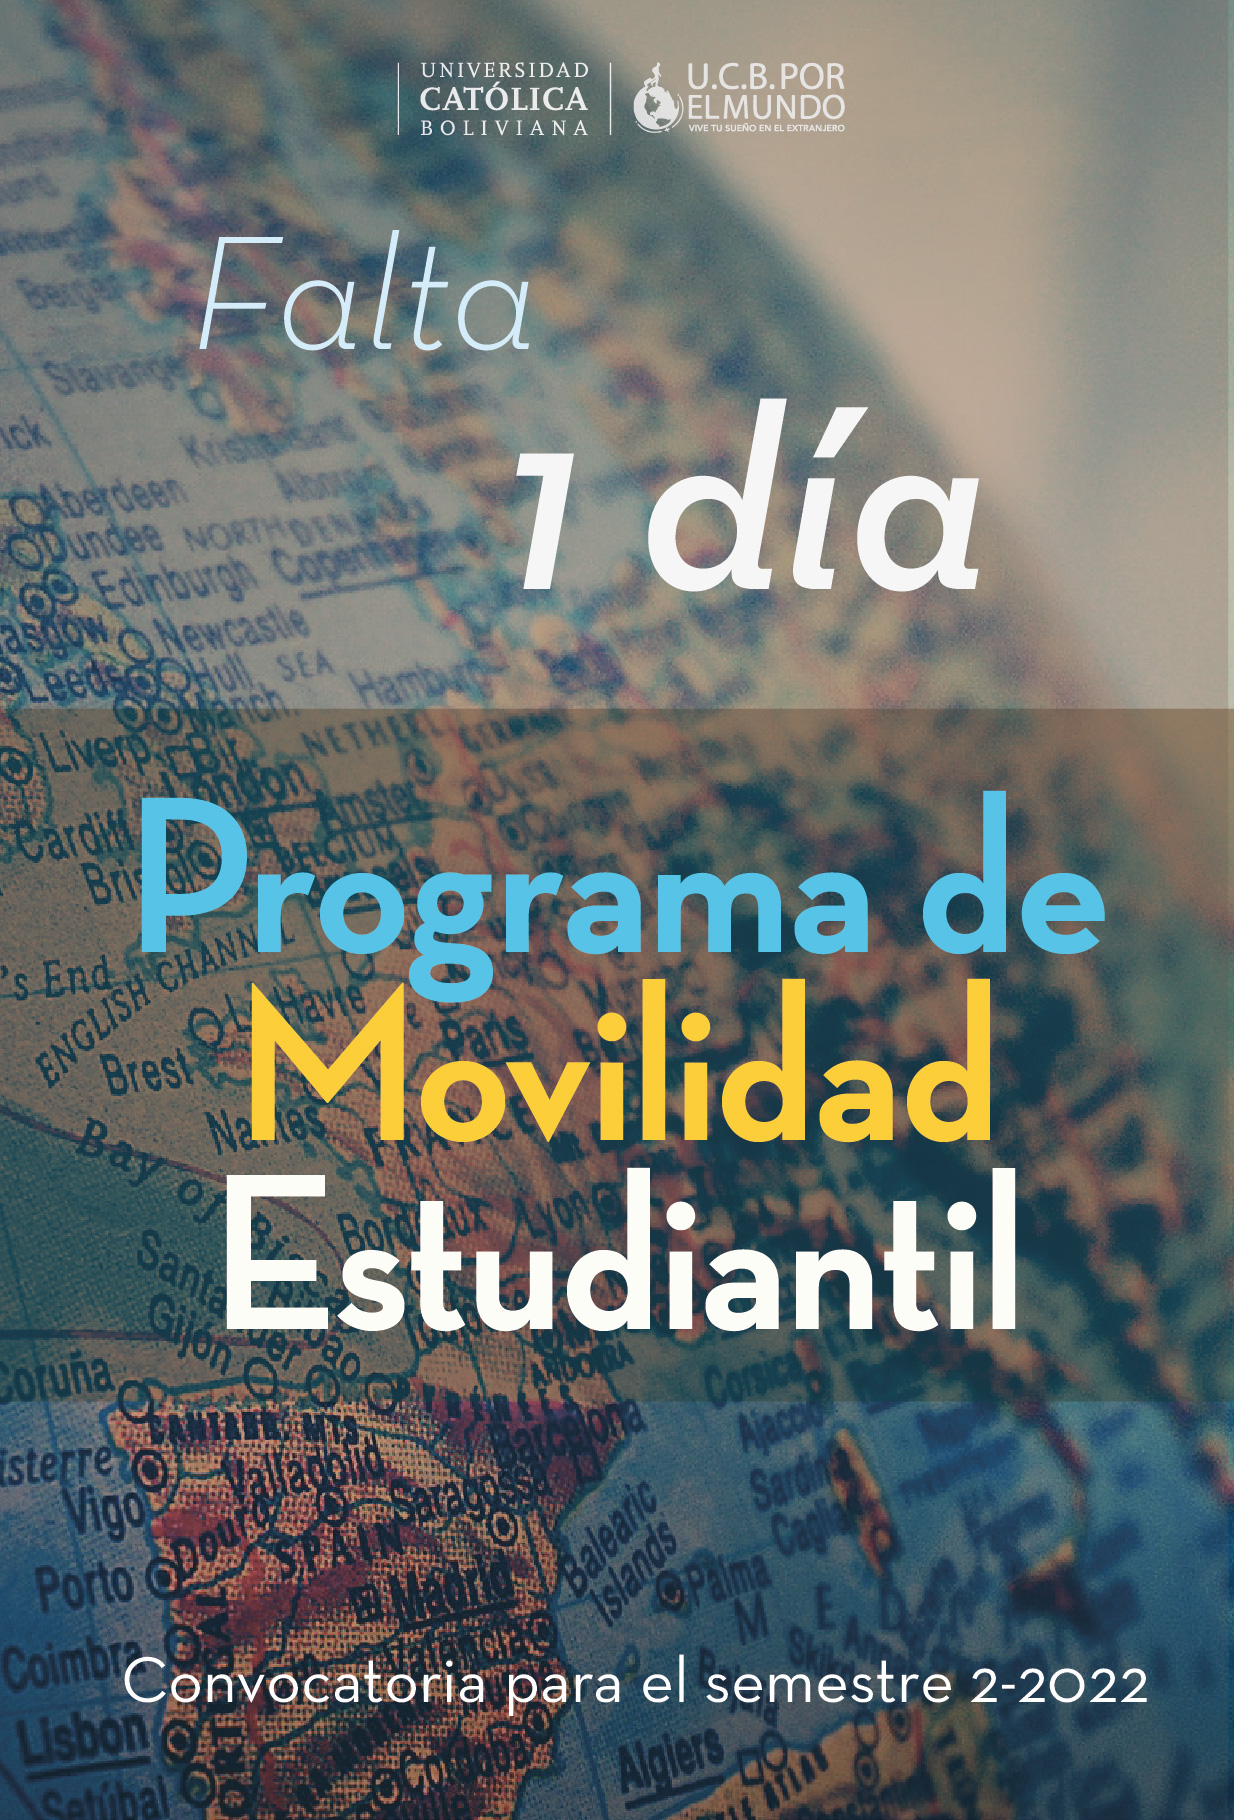 Mañana se publica la convocatoria del Programa de Movilidad Estudiantil UCB por el Mundo para el Semestre 2-2022.